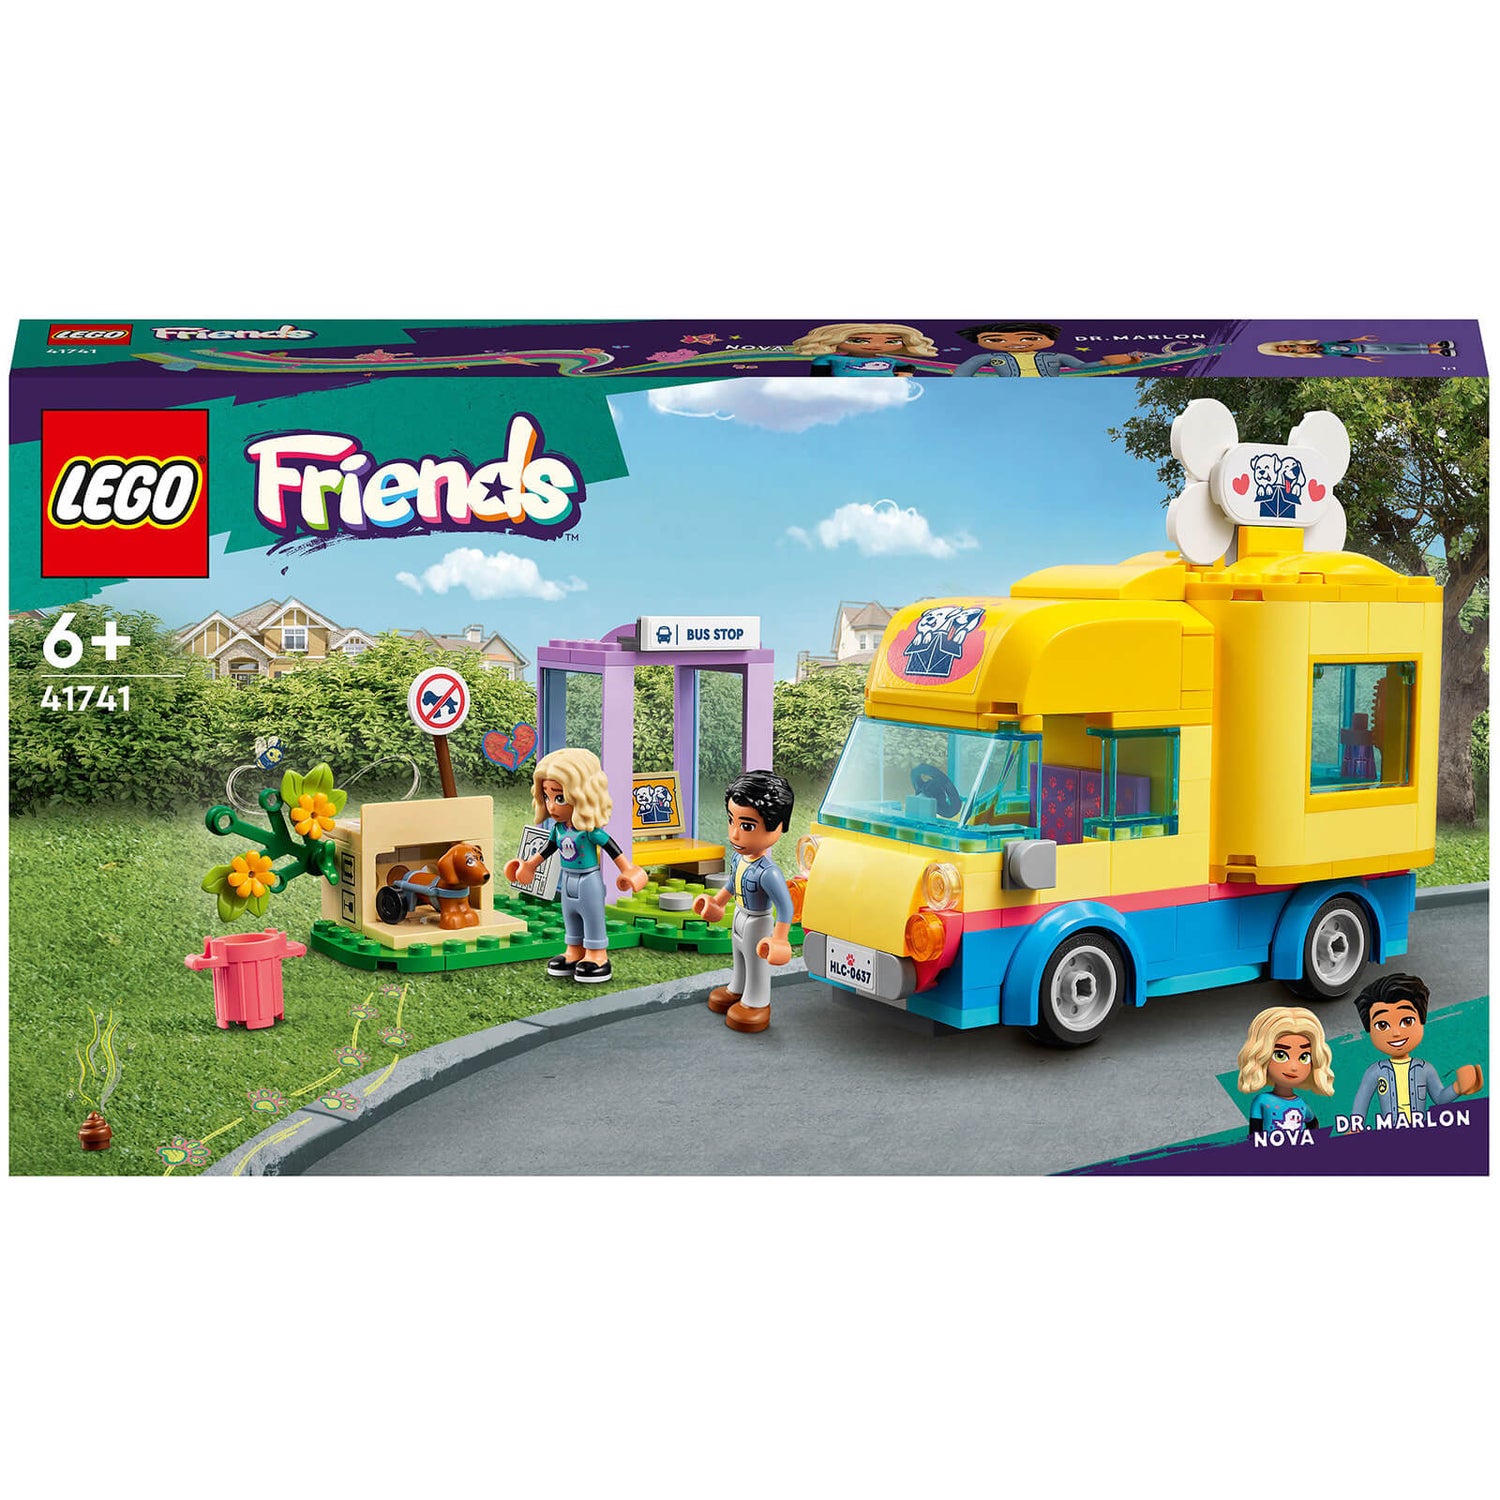 LEGO Friends: Dog Rescue Van Pet Puppy Animal Playset (41741)